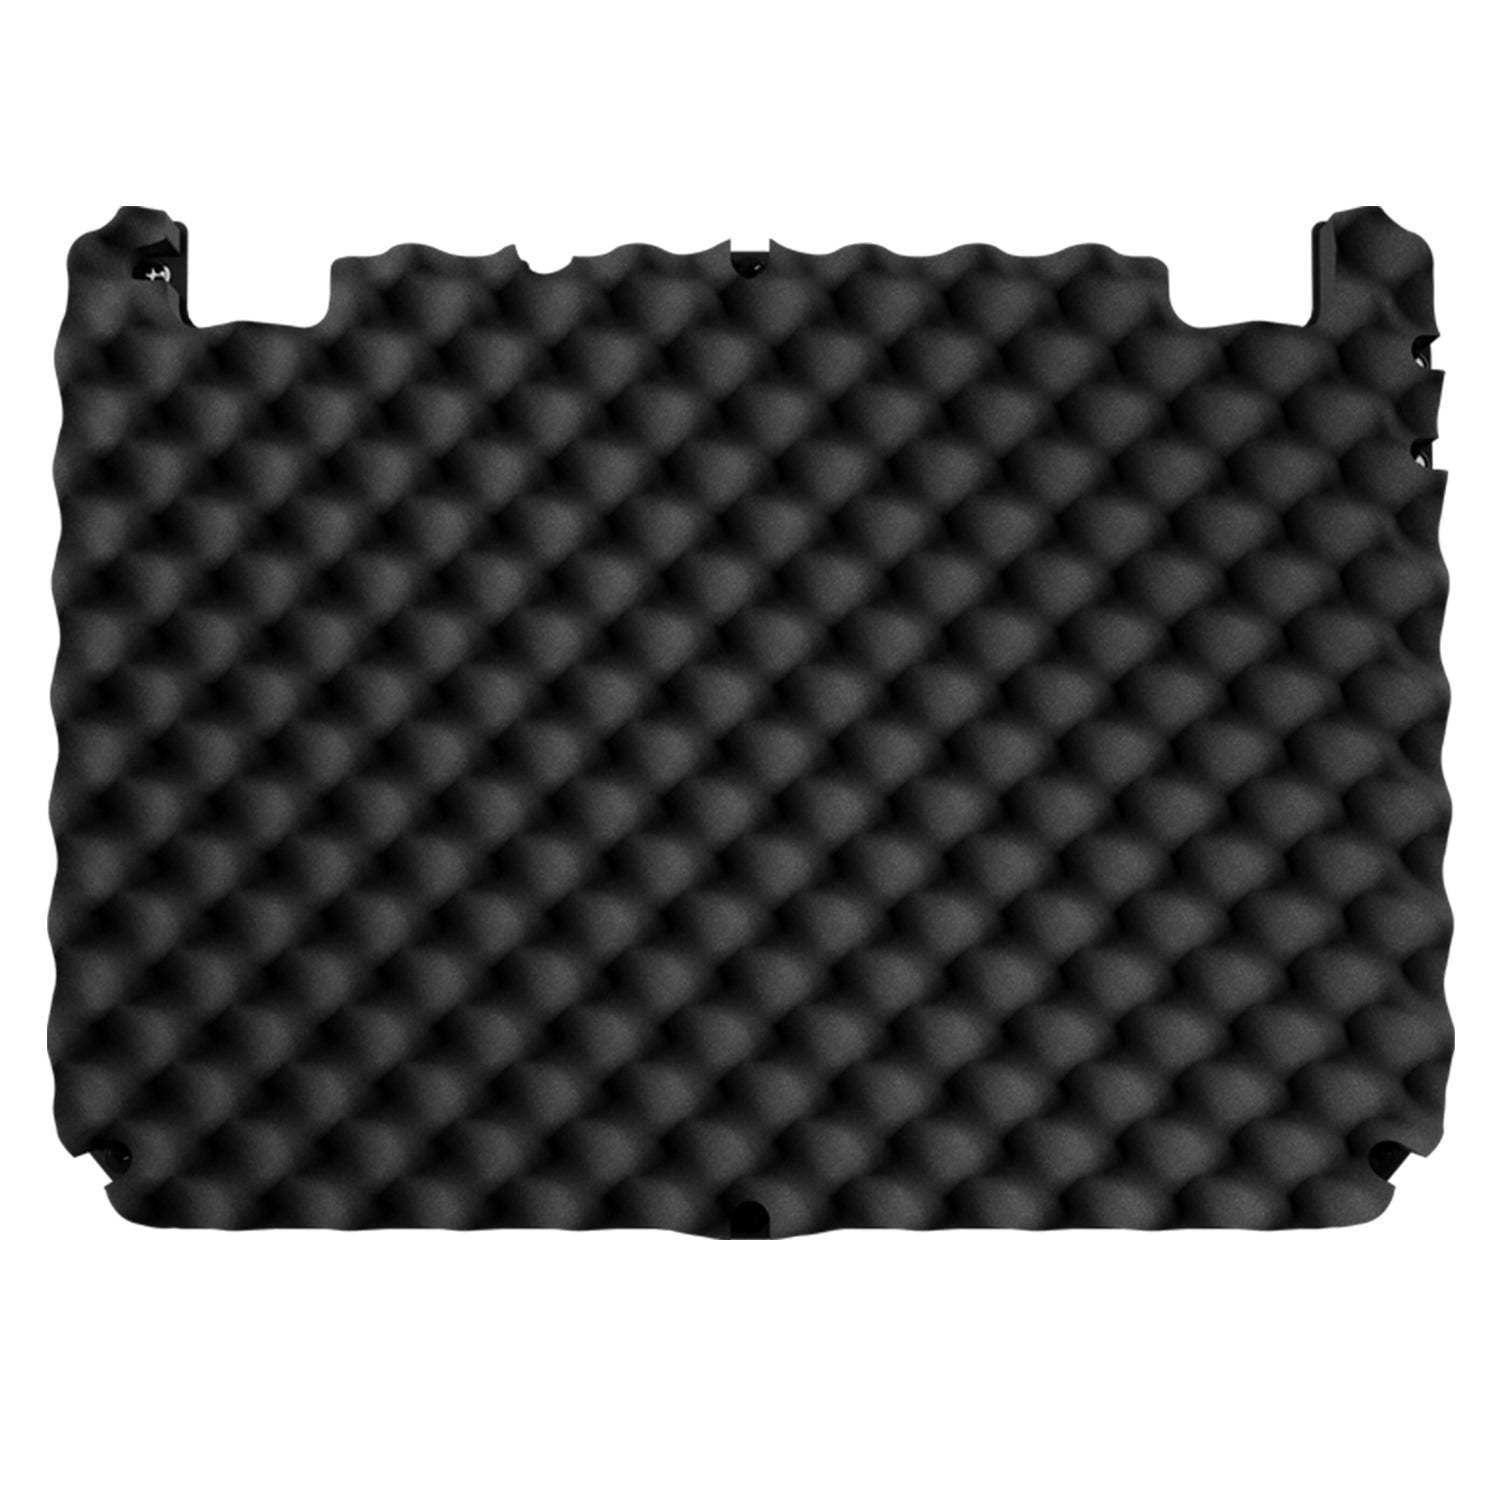 Vaultek Lifepod XT Crate Foam For Cover XT-FM2